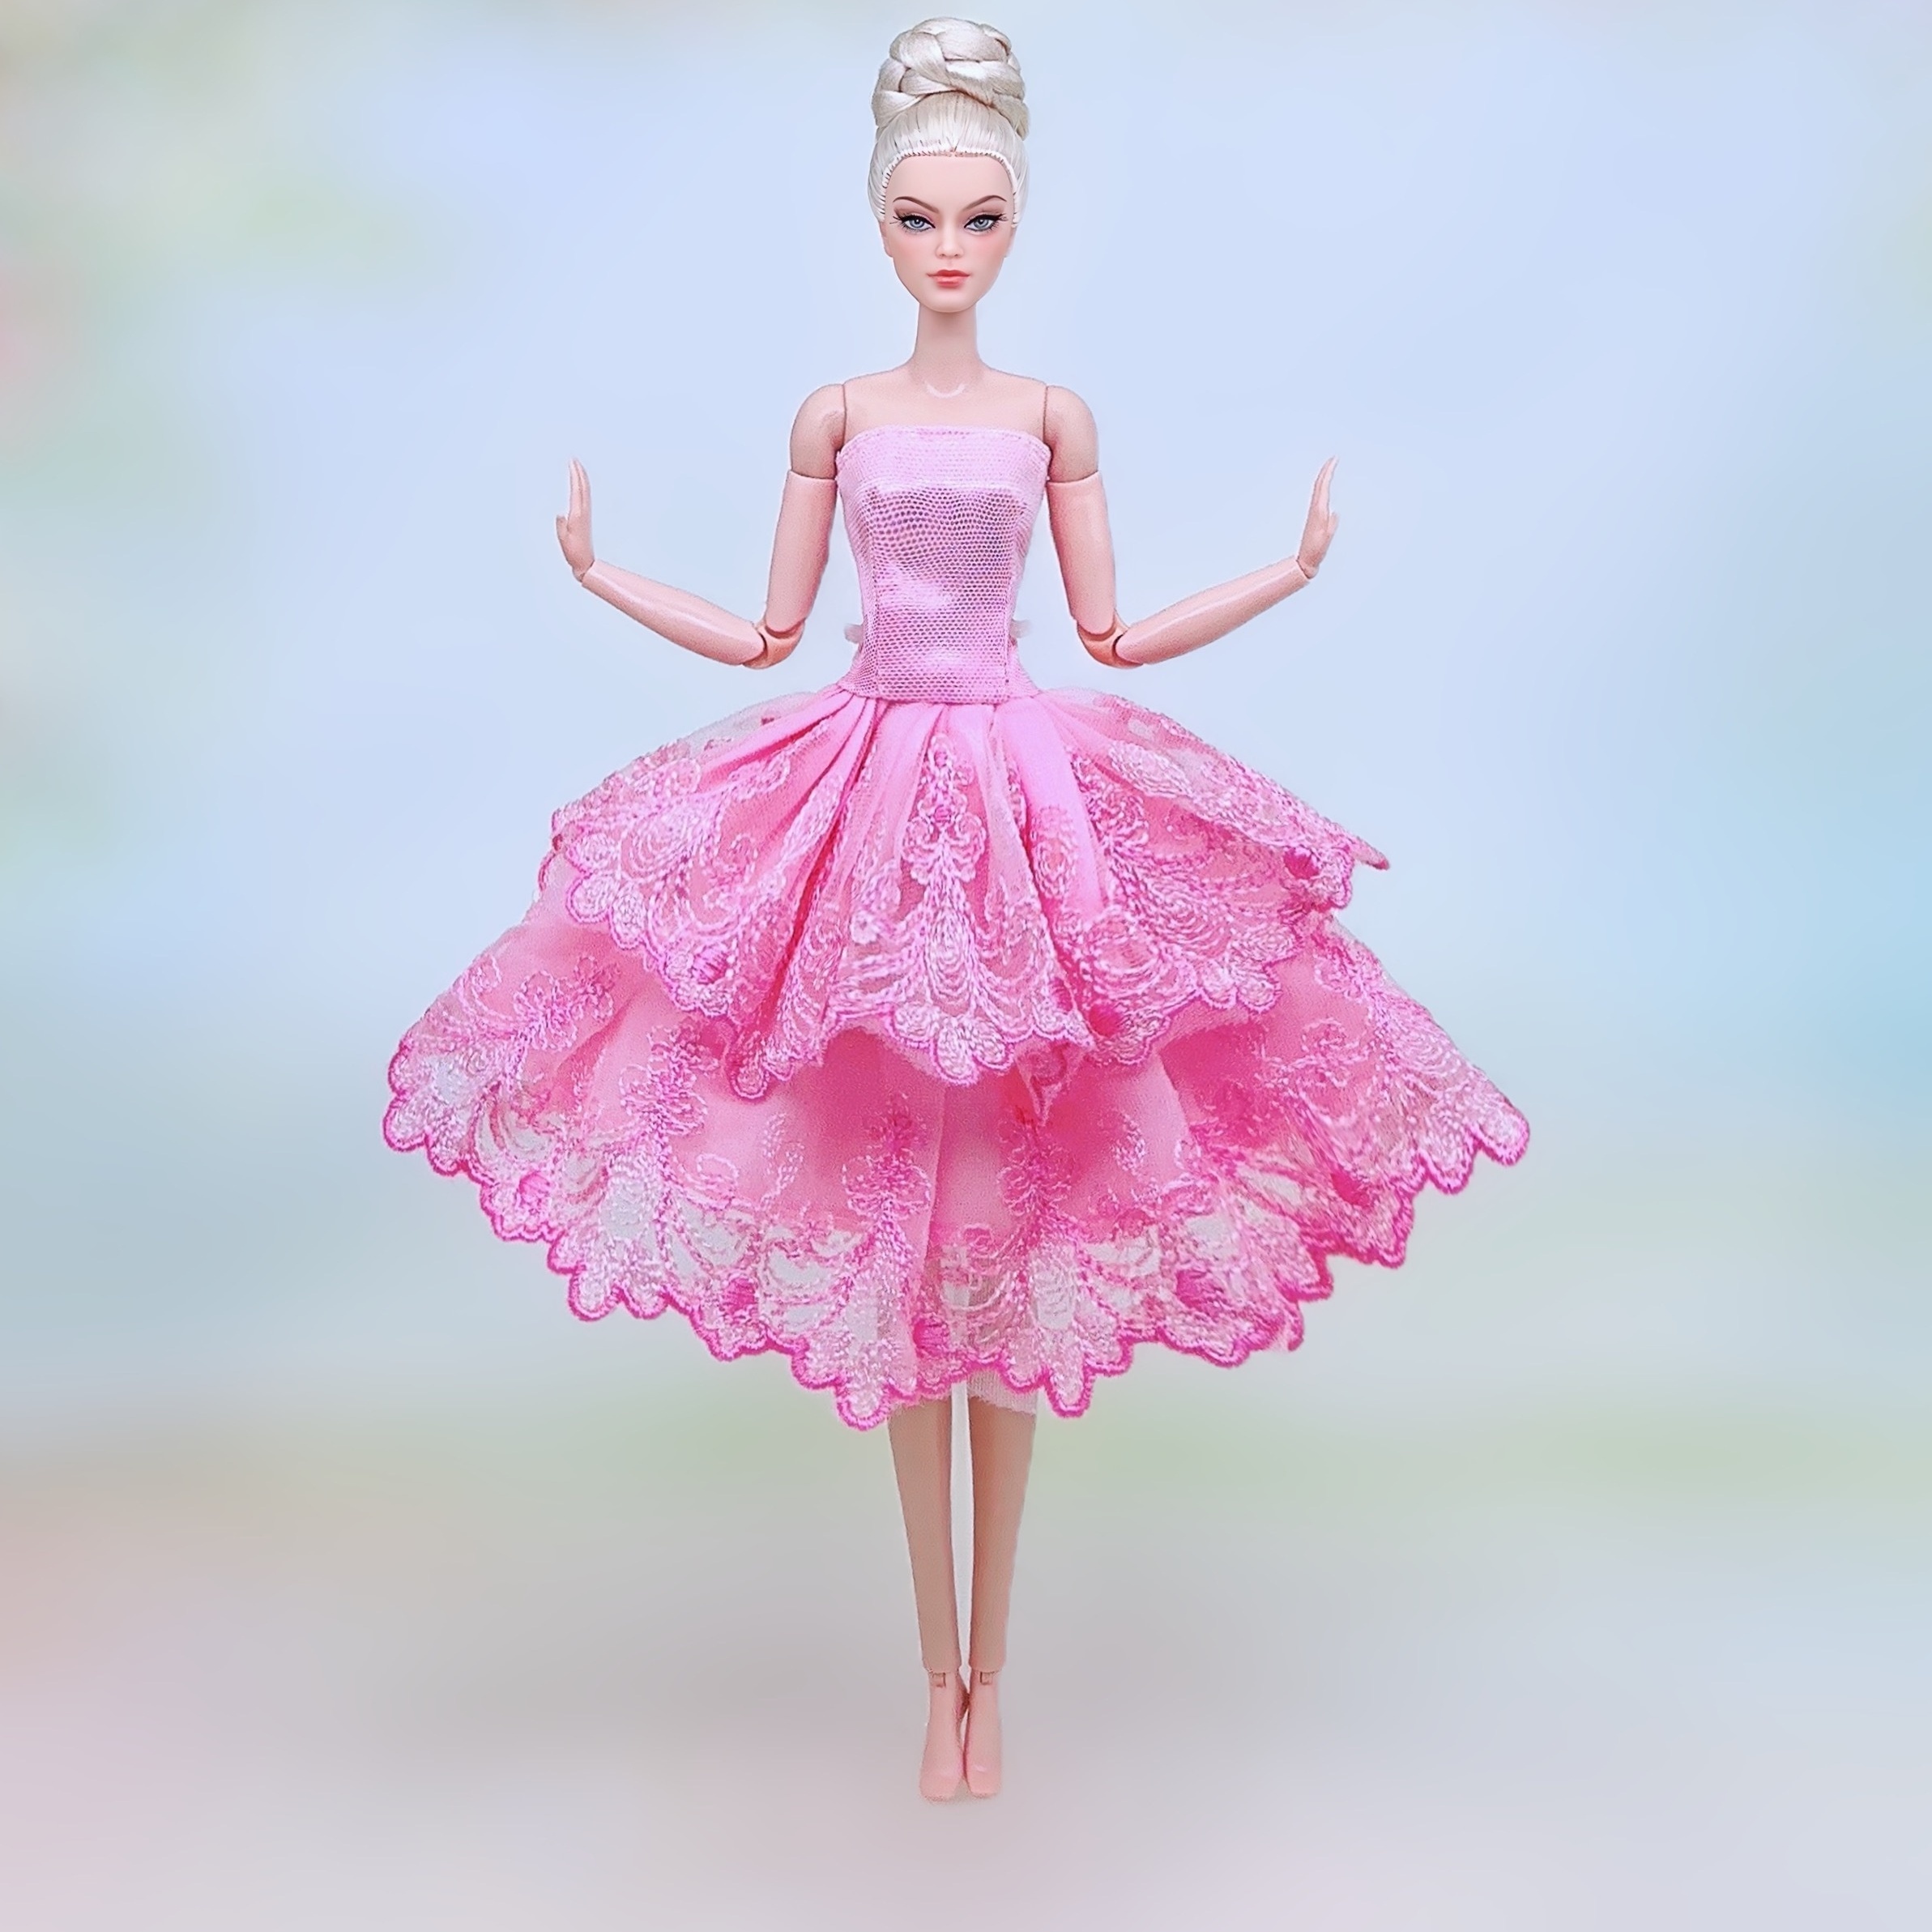 Moda princesa vestido de casamento para barbie 1/6 roupas de